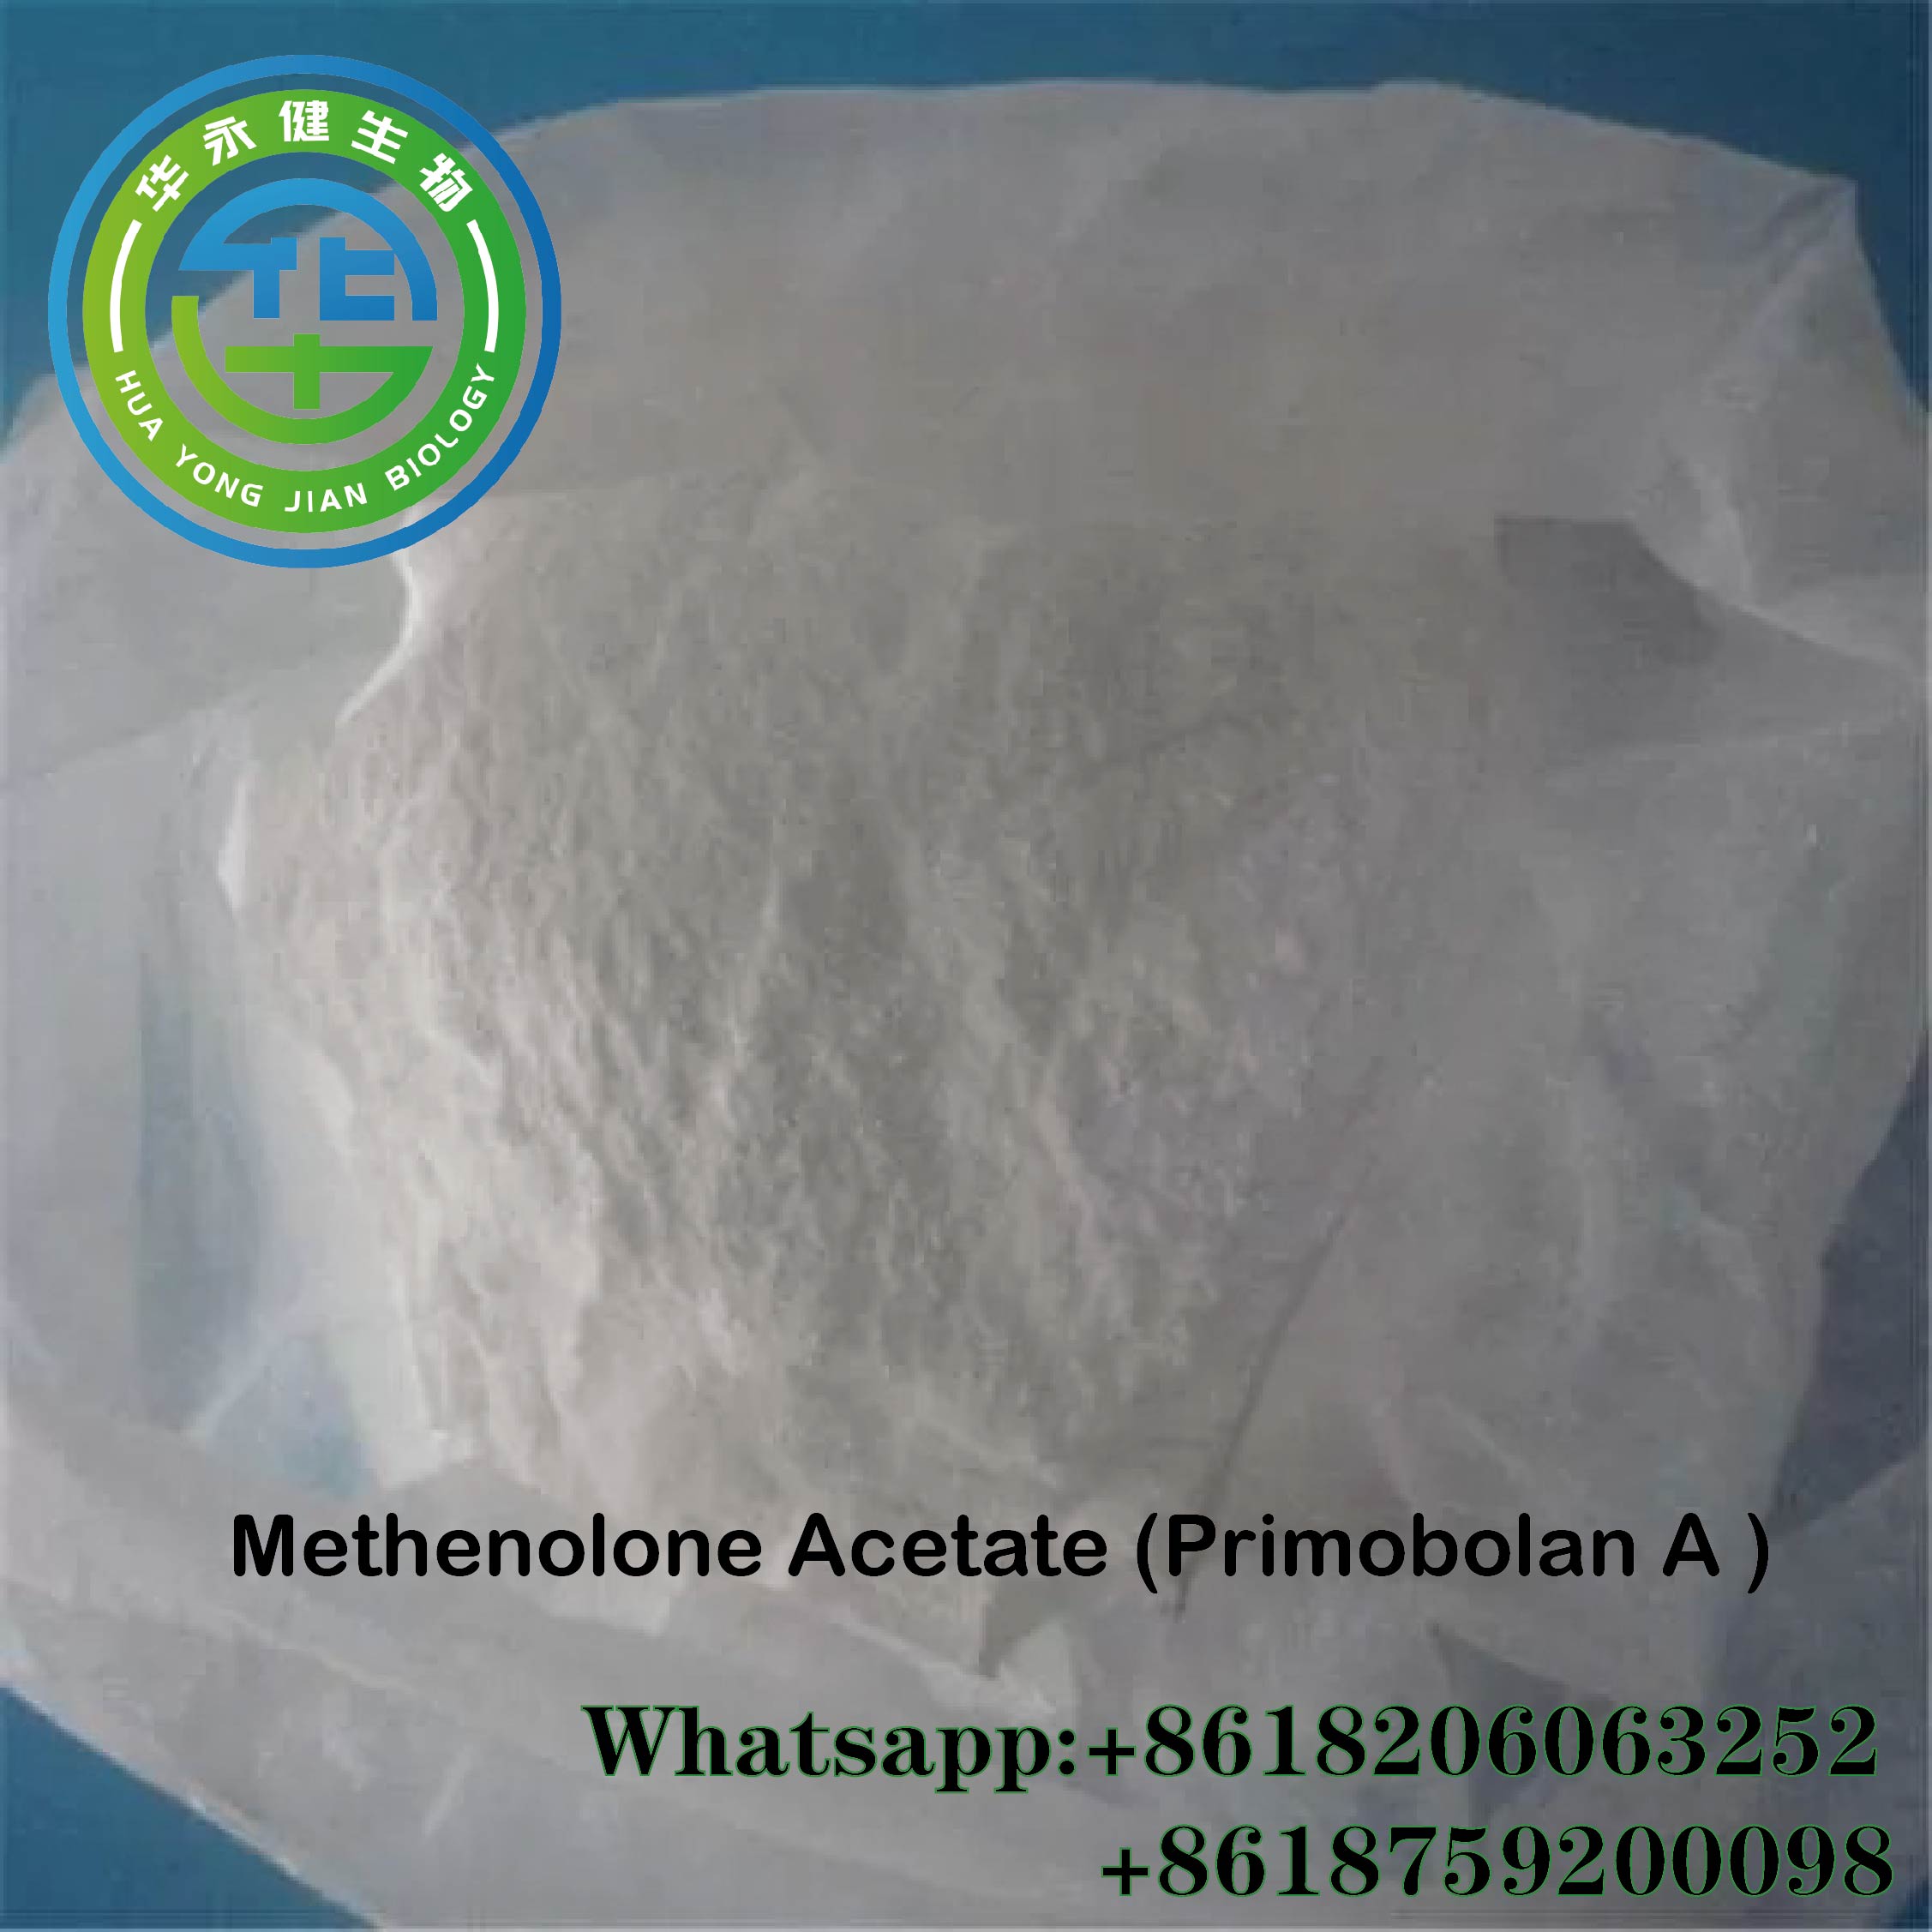 Methenolone Acetate Female Anabolic Steroid Hormone Powder Primobolan pure benzocaine powder CAS 434-05-9 